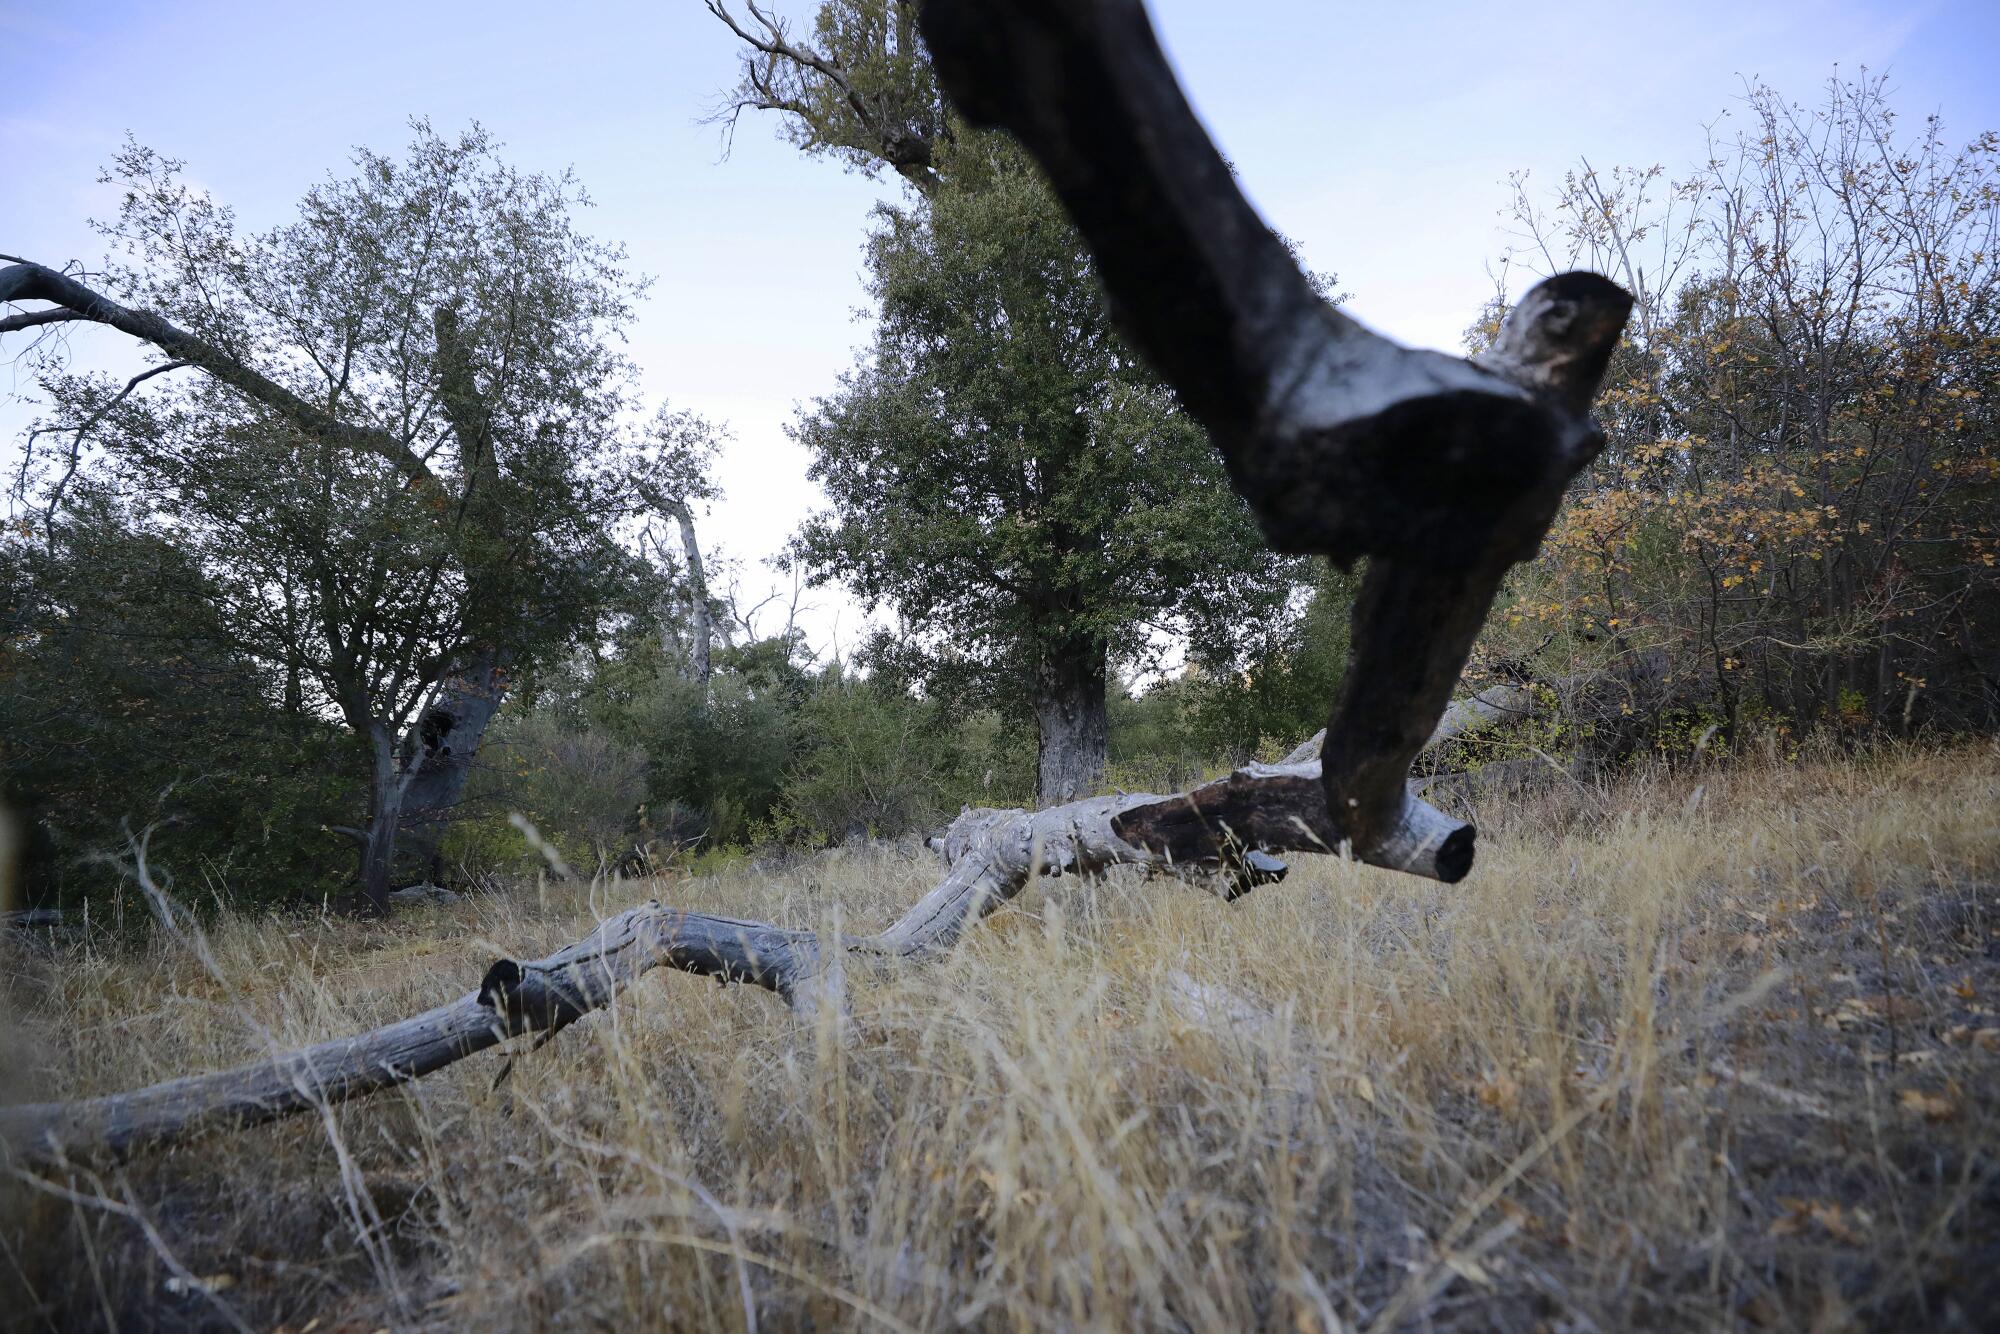 Criminalist Kevin Brown hanged himself at Cuyamaca Rancho State Park.